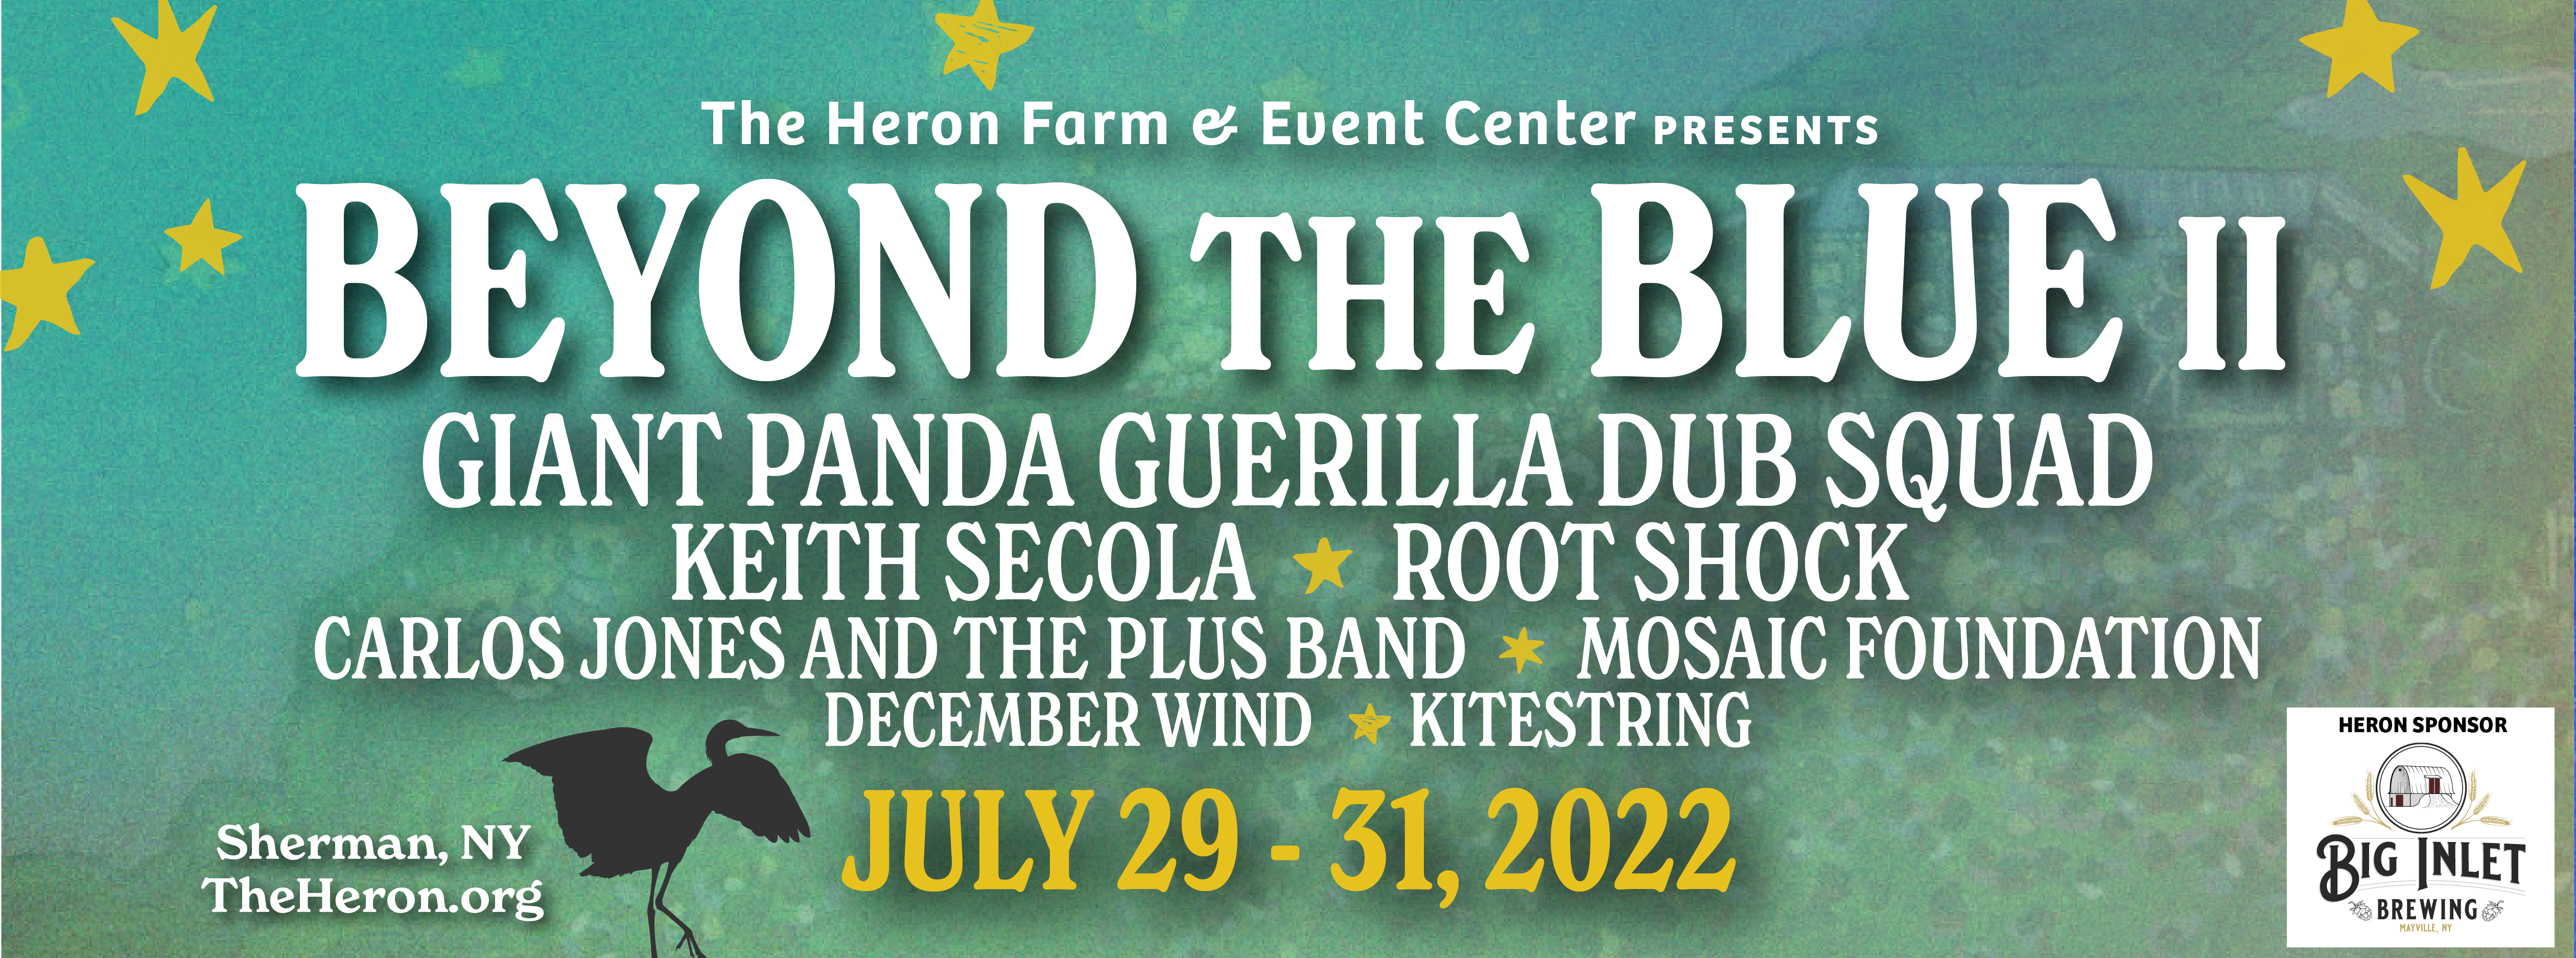 Beyond the Blue 2 Music Festival 2022